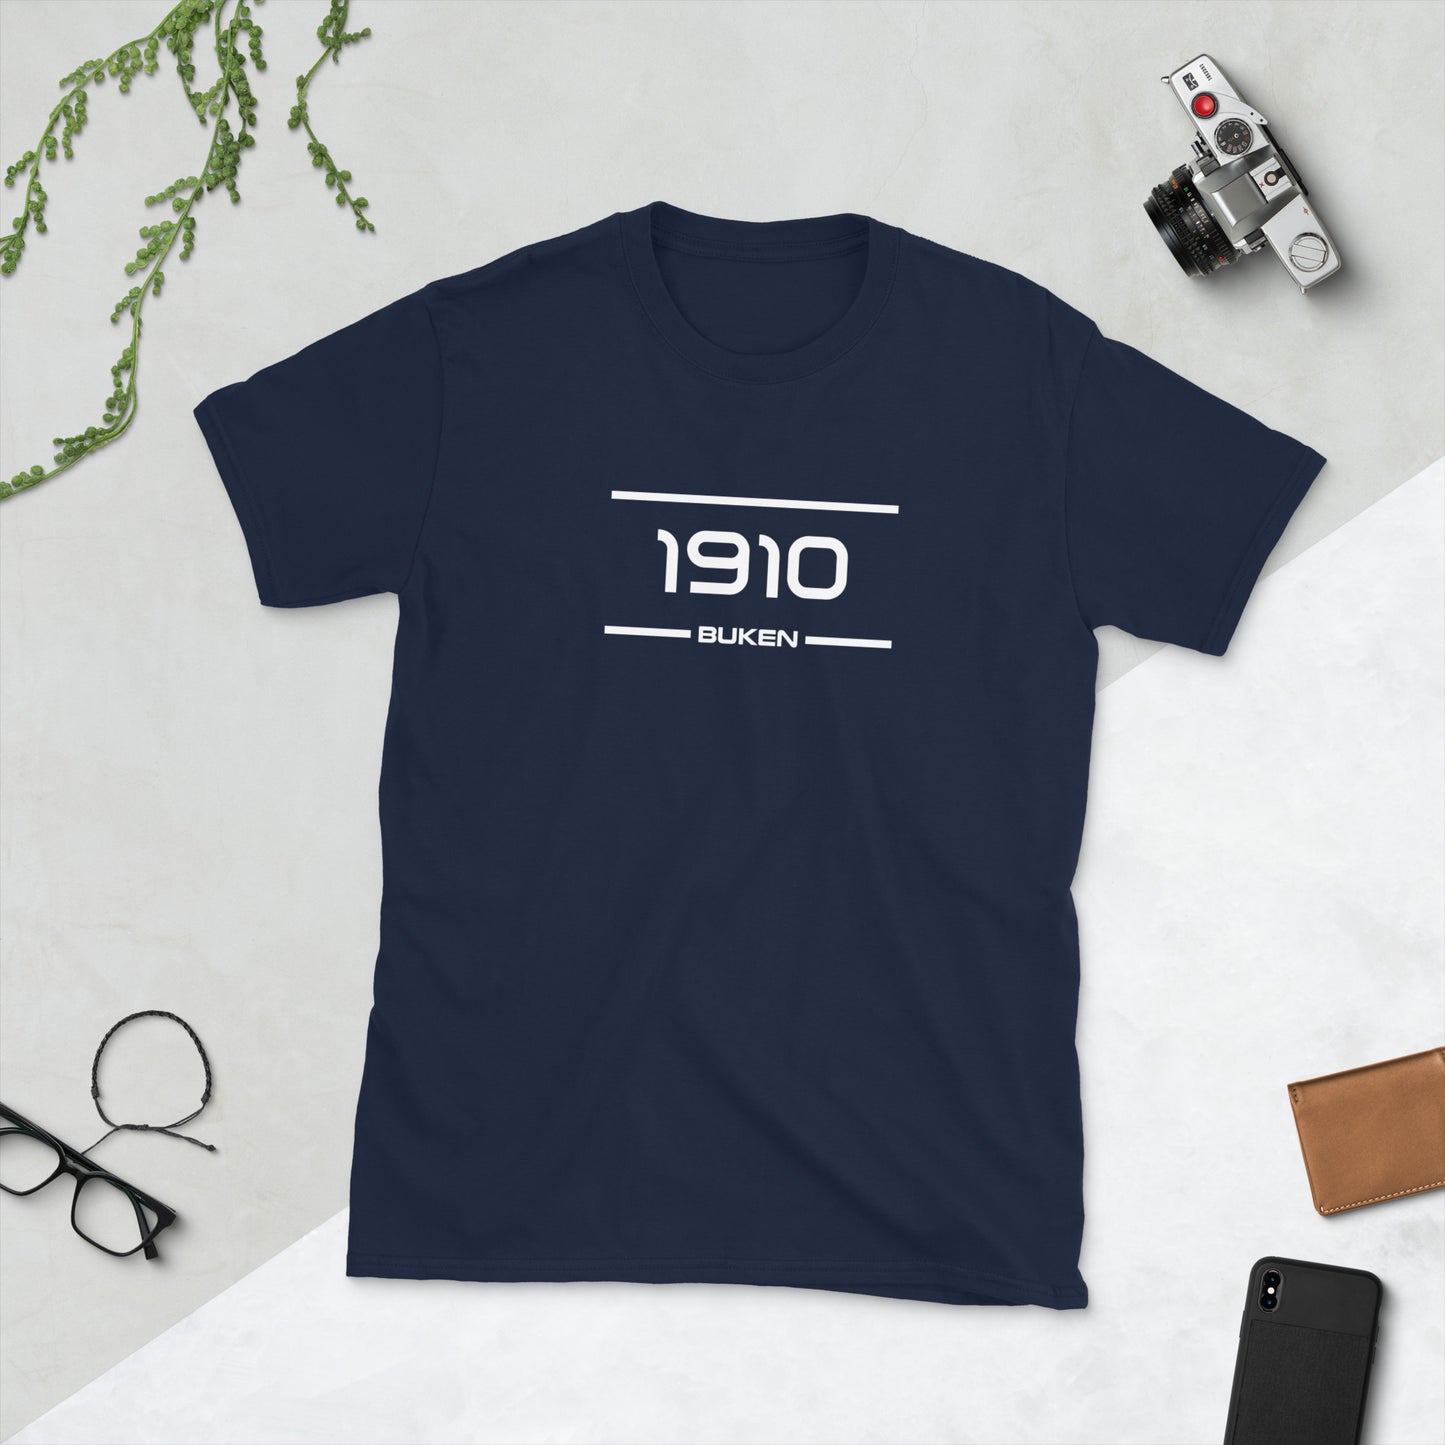 Tshirt - 1910 - Buken